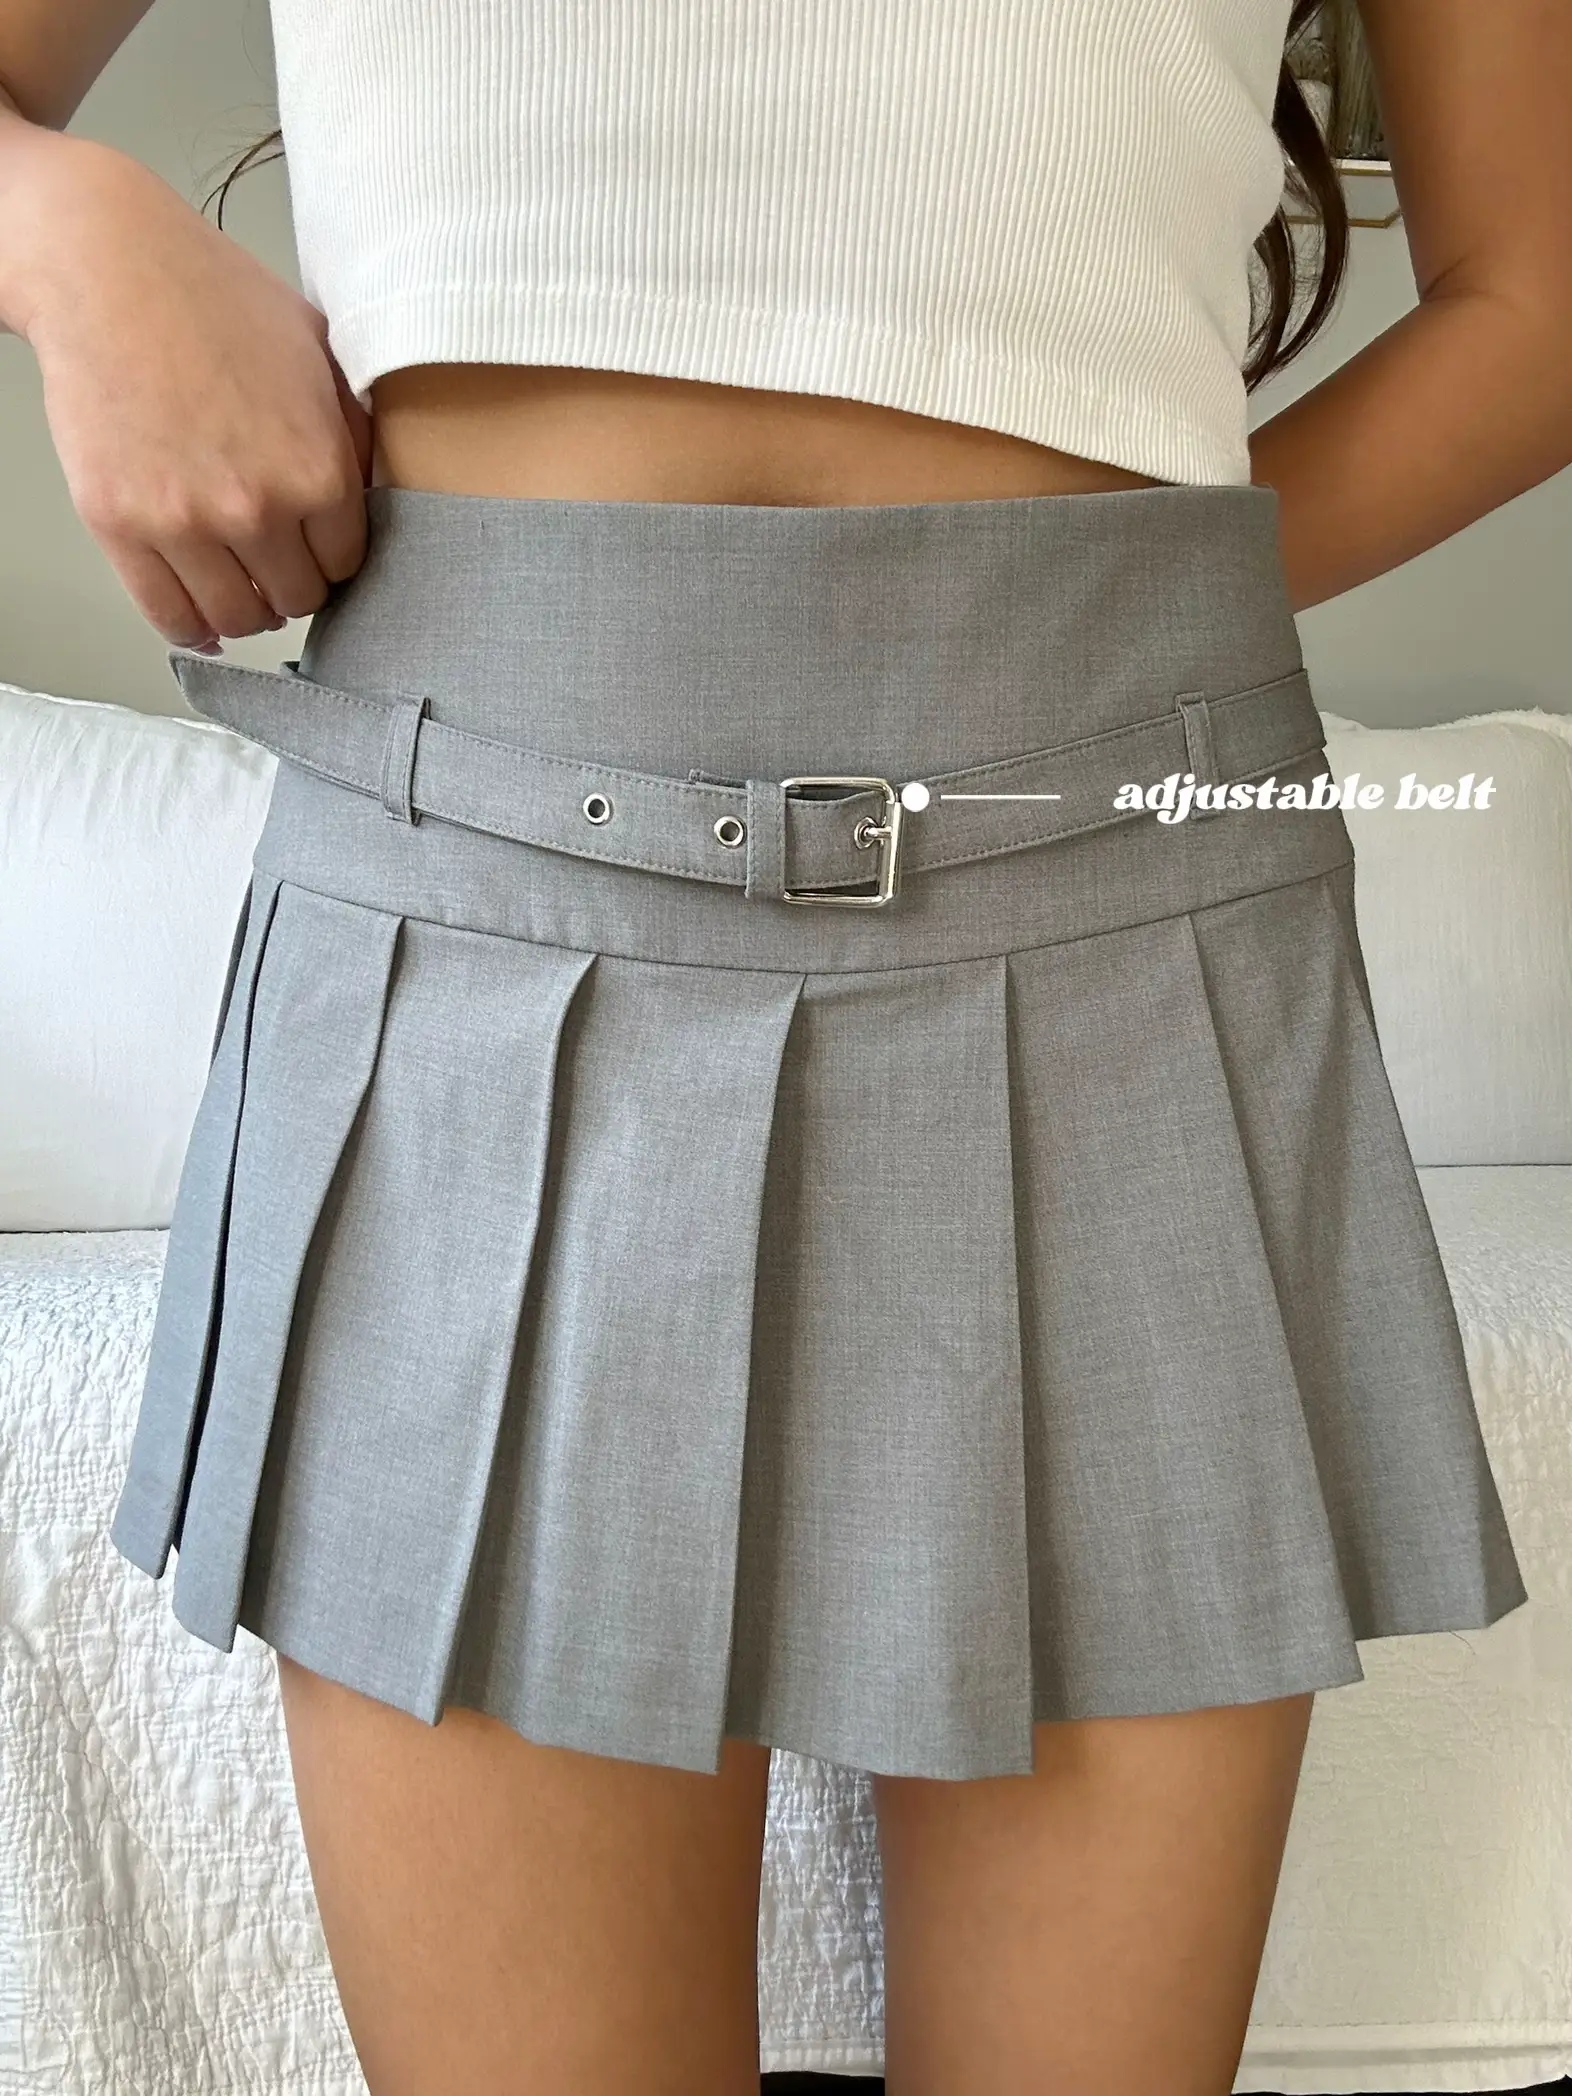 ZARA Limitless Contour Collection Skirt. M-L Color Brown